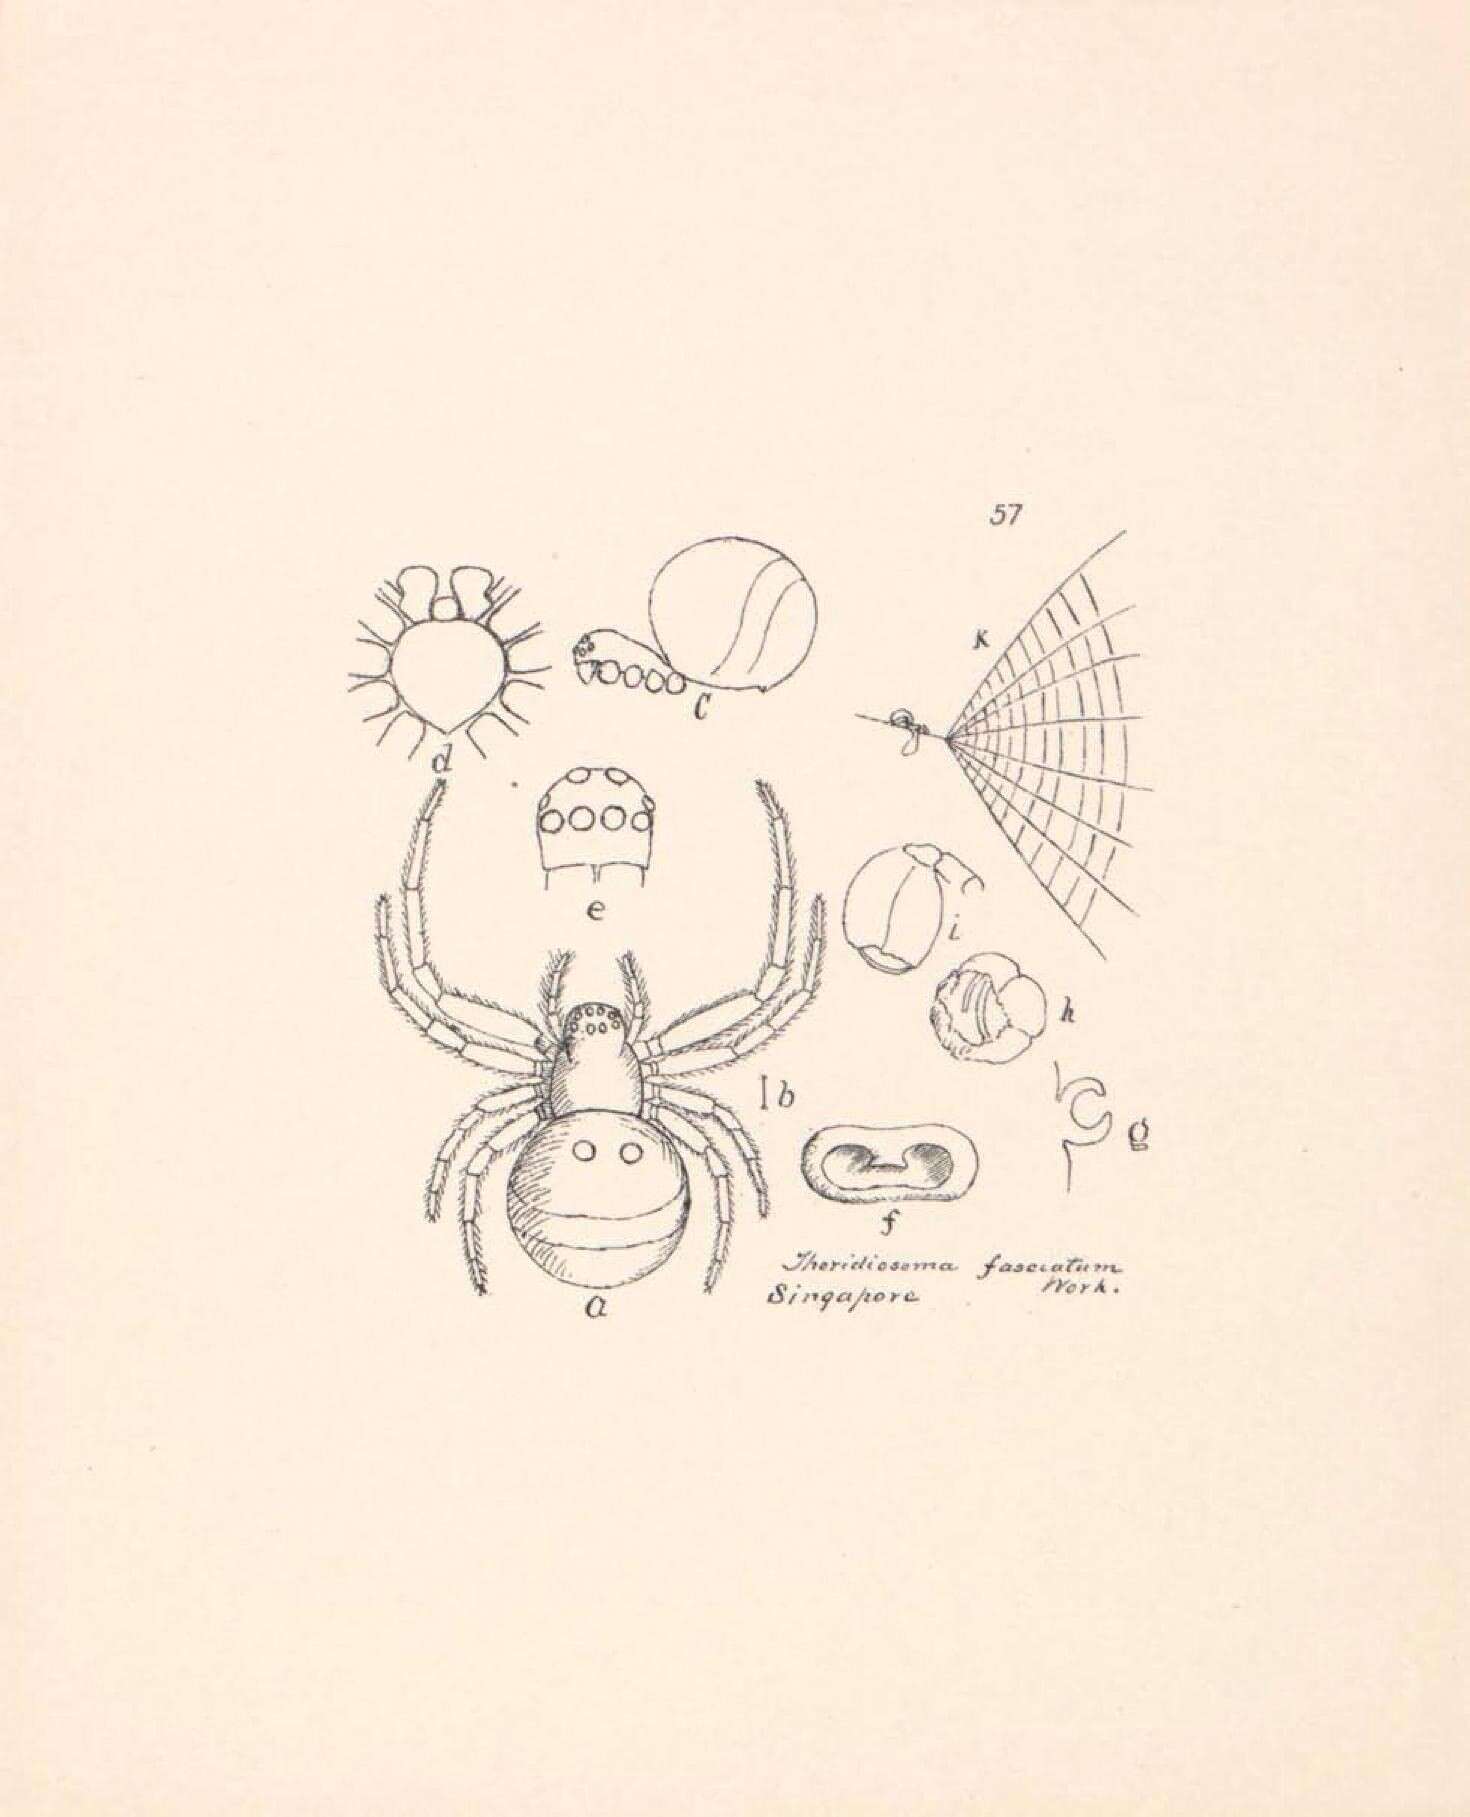 Image de Theridiosoma fasciatum Workman 1896